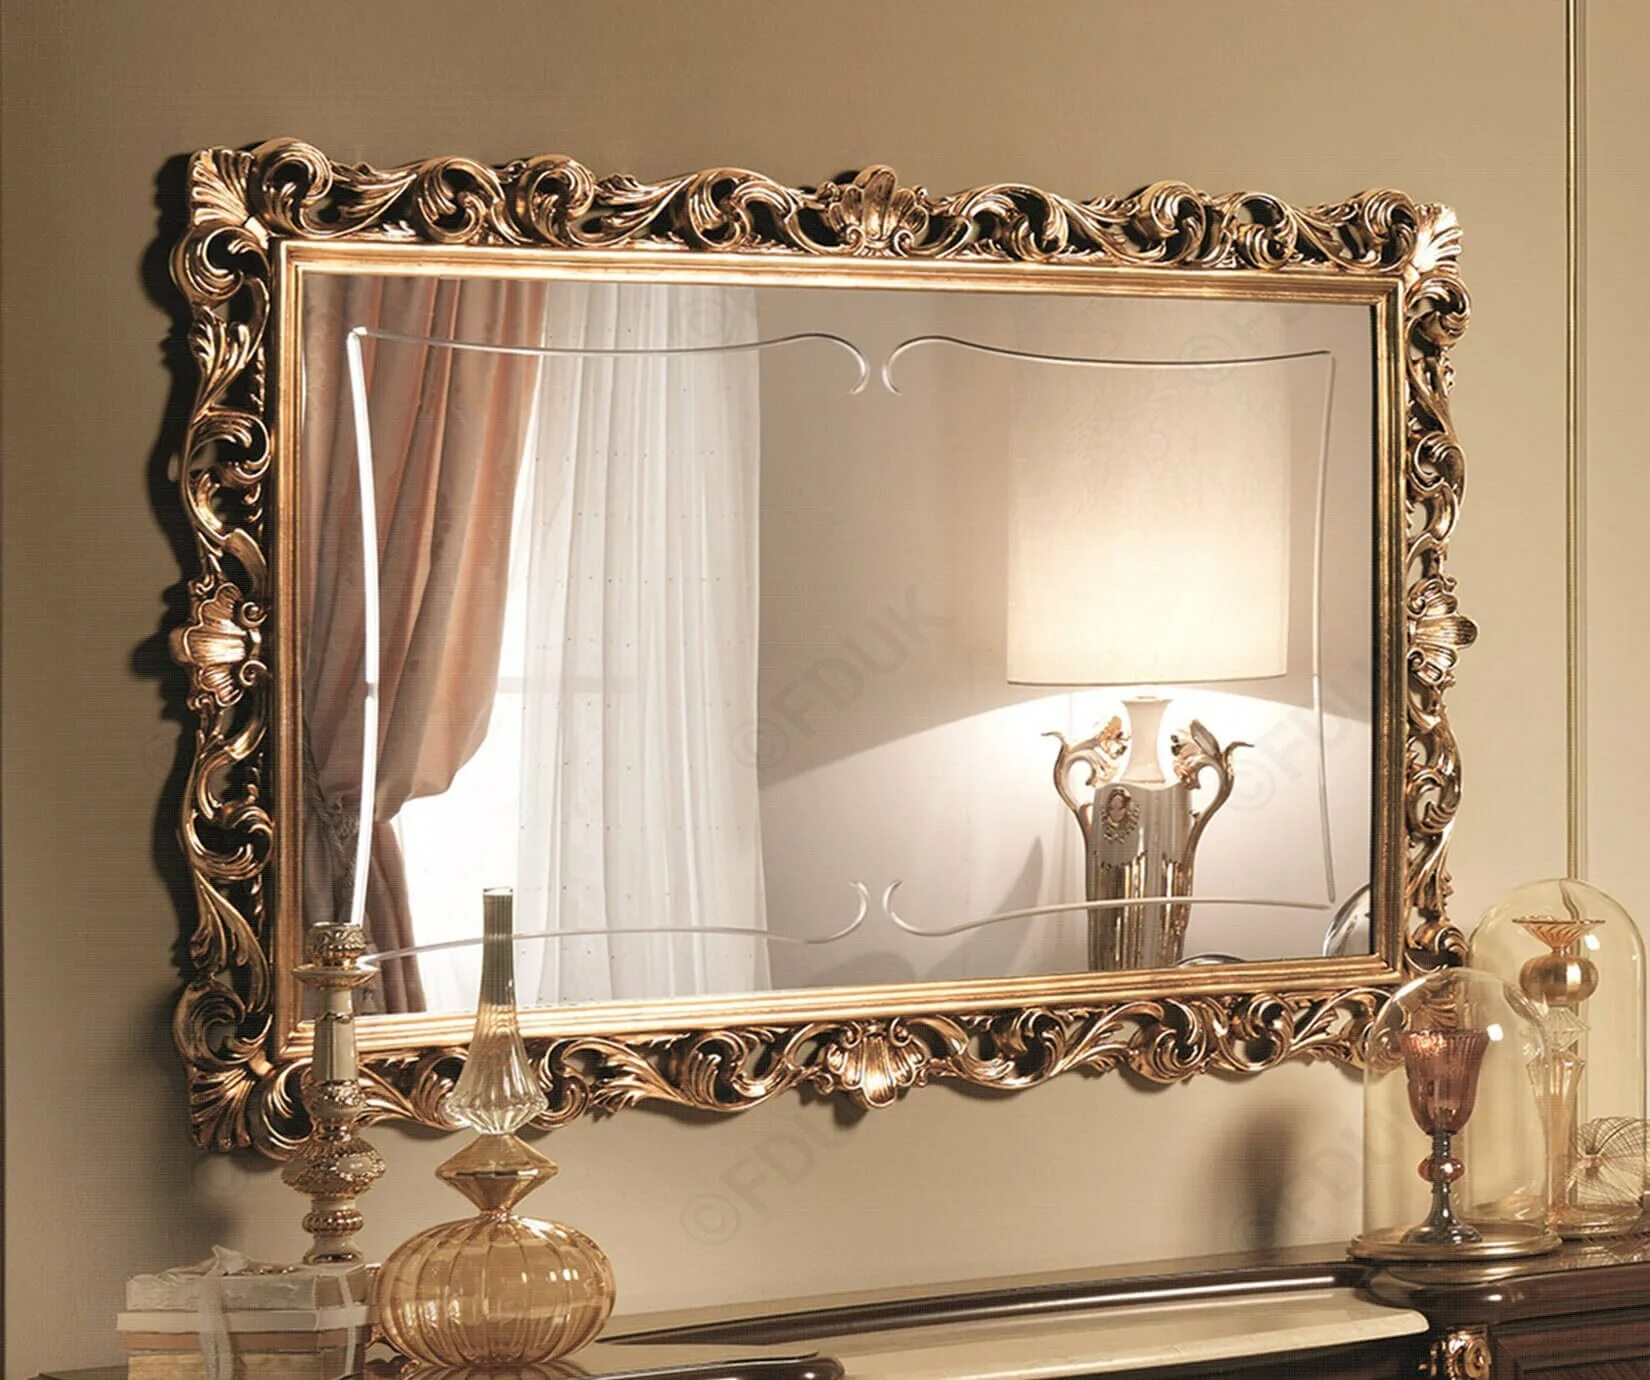 «Золотое зеркало» Вилланд. Arredo Classic poesia зеркало. Спальня arredo Classic Sinfonia. Зеркало Carved MK-3206-ce. Зеркала классика купить